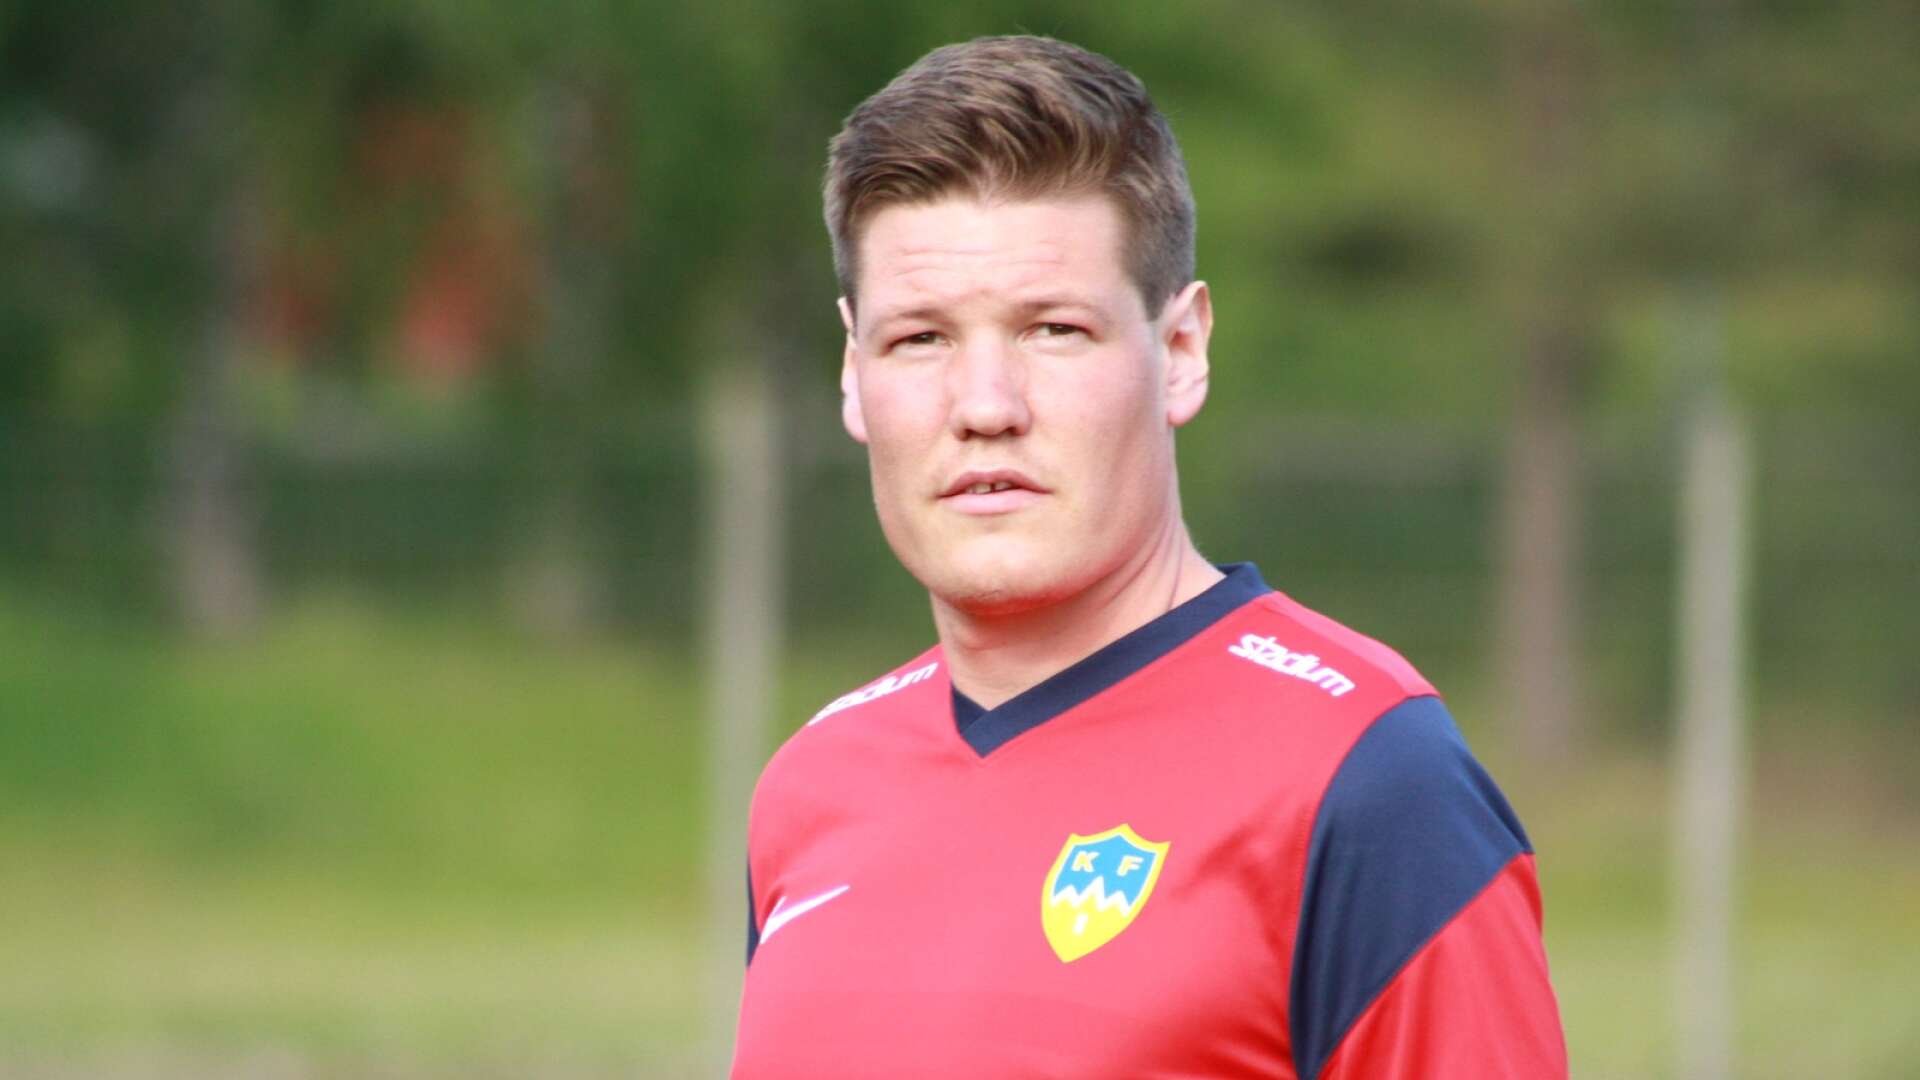 Matchhjälte blev Jonathan Bergström i Korsberga som gjorde matchens enda mål.